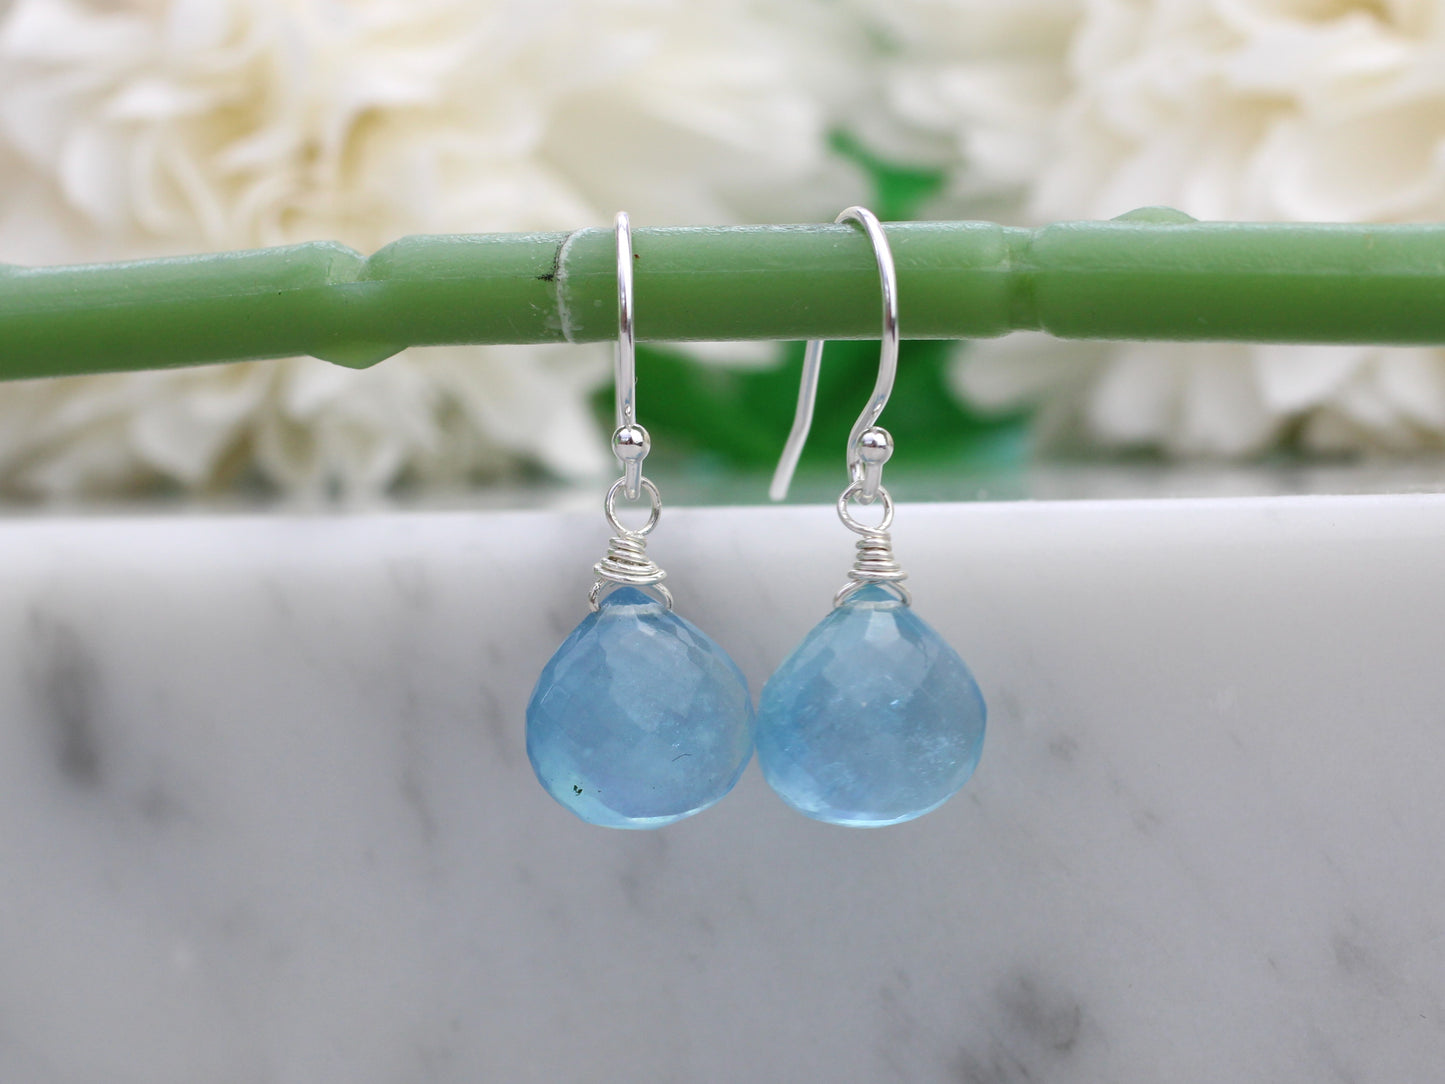 Aquamarine drop earrings in silver or gold.